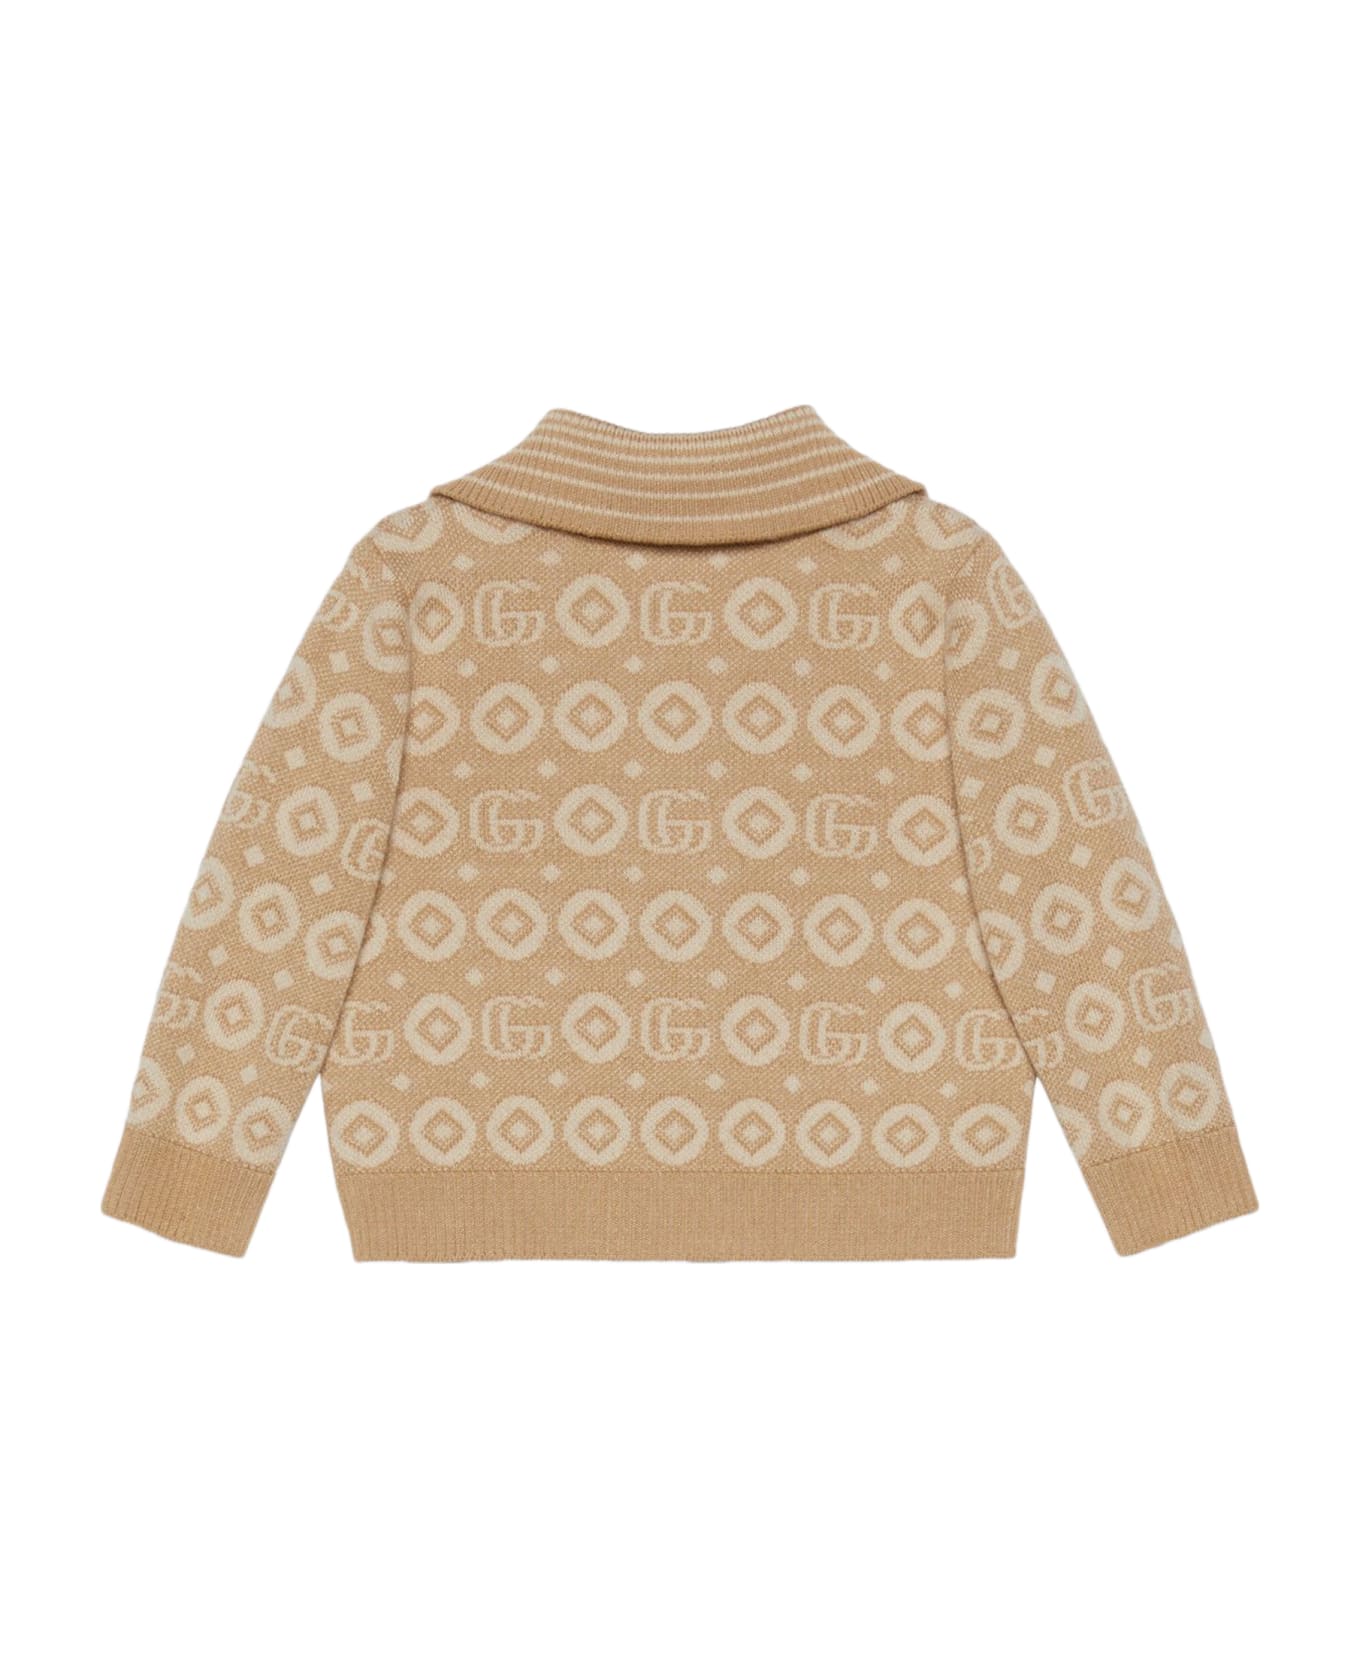 Gucci Kids Sweaters Beige - Beige